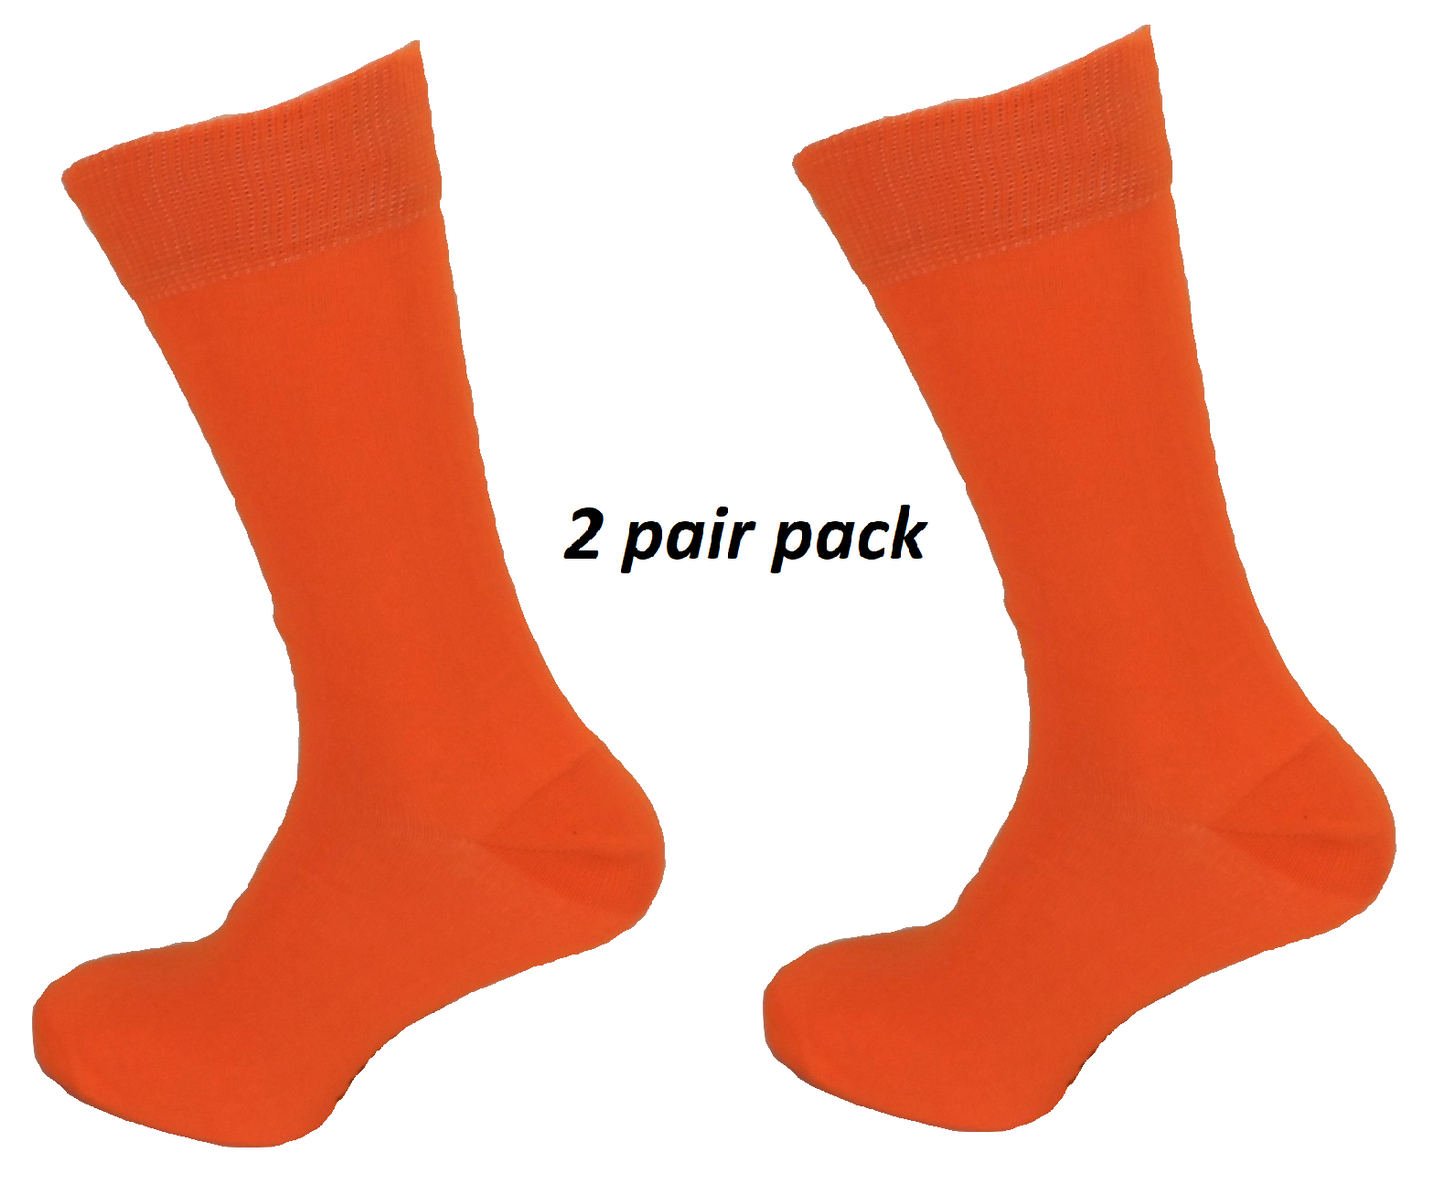 Orangefarbene Retro- Socks für Herren im 2er-Pack